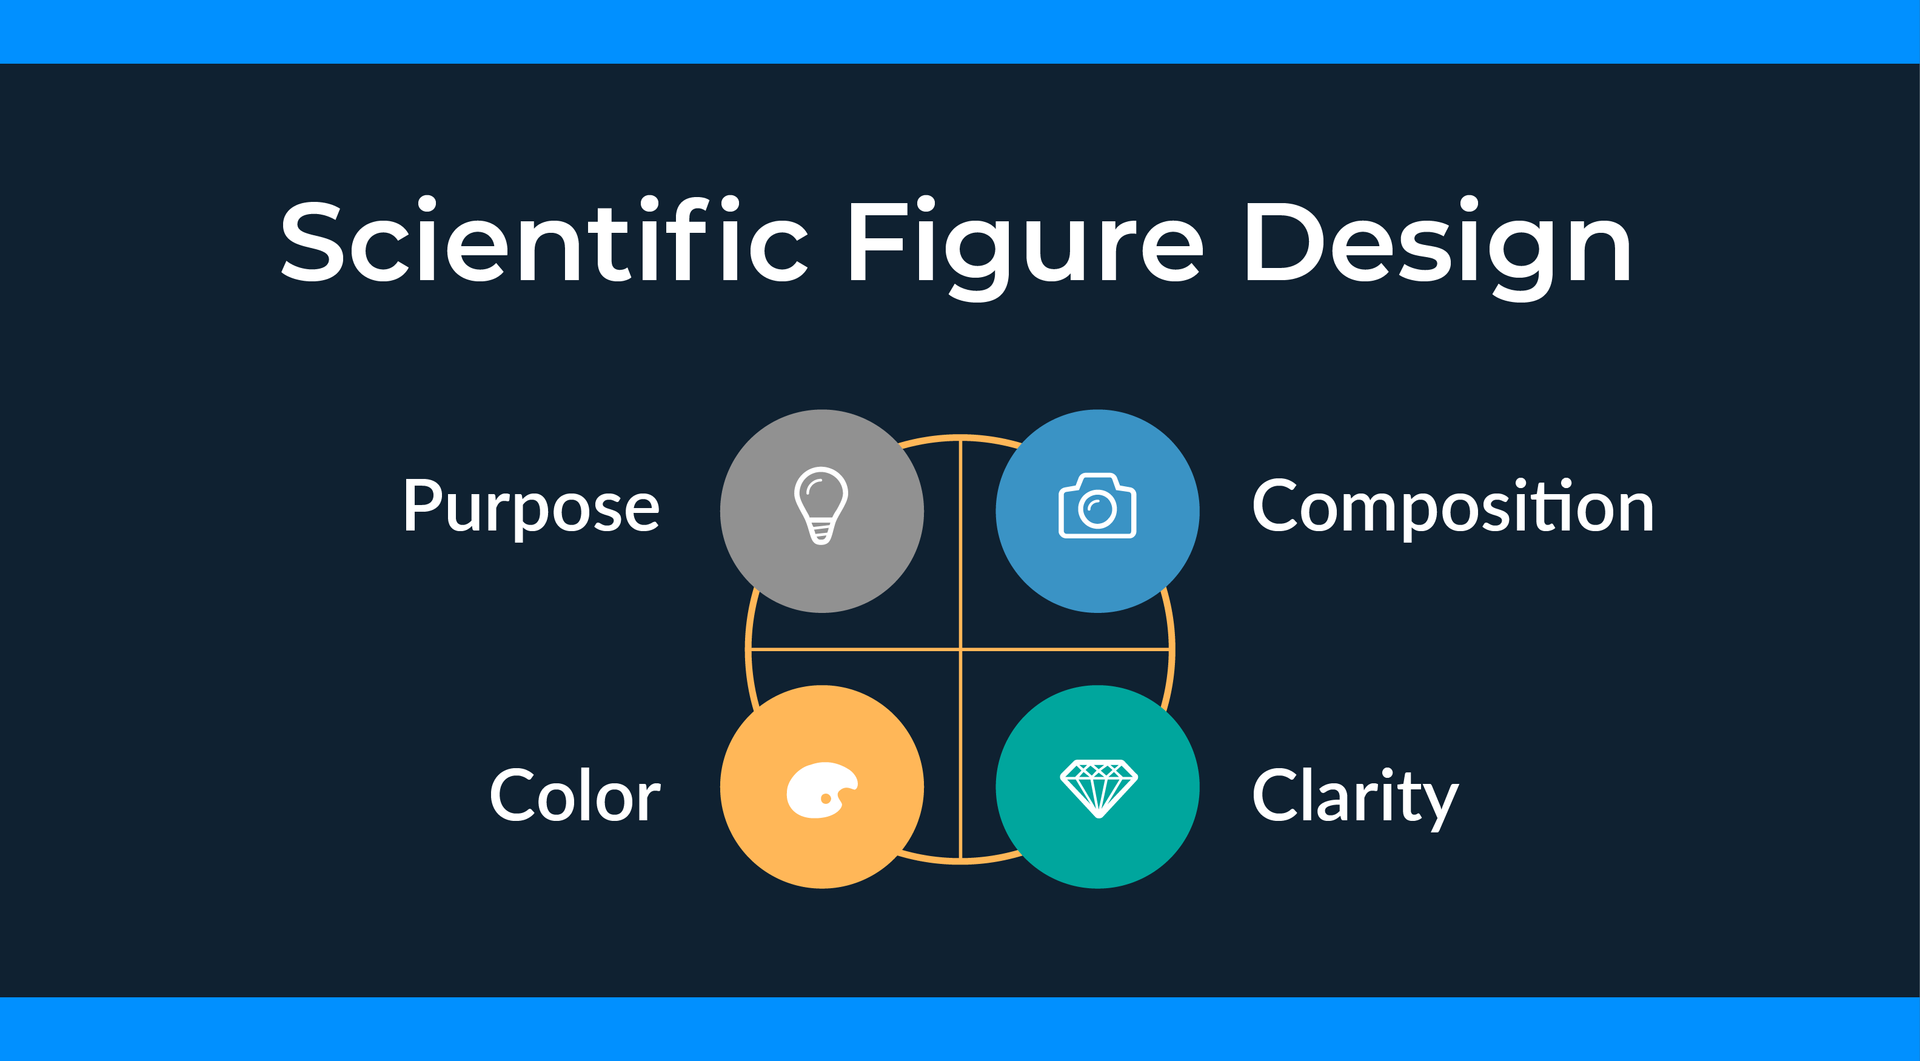 Scientific figure design online course summary